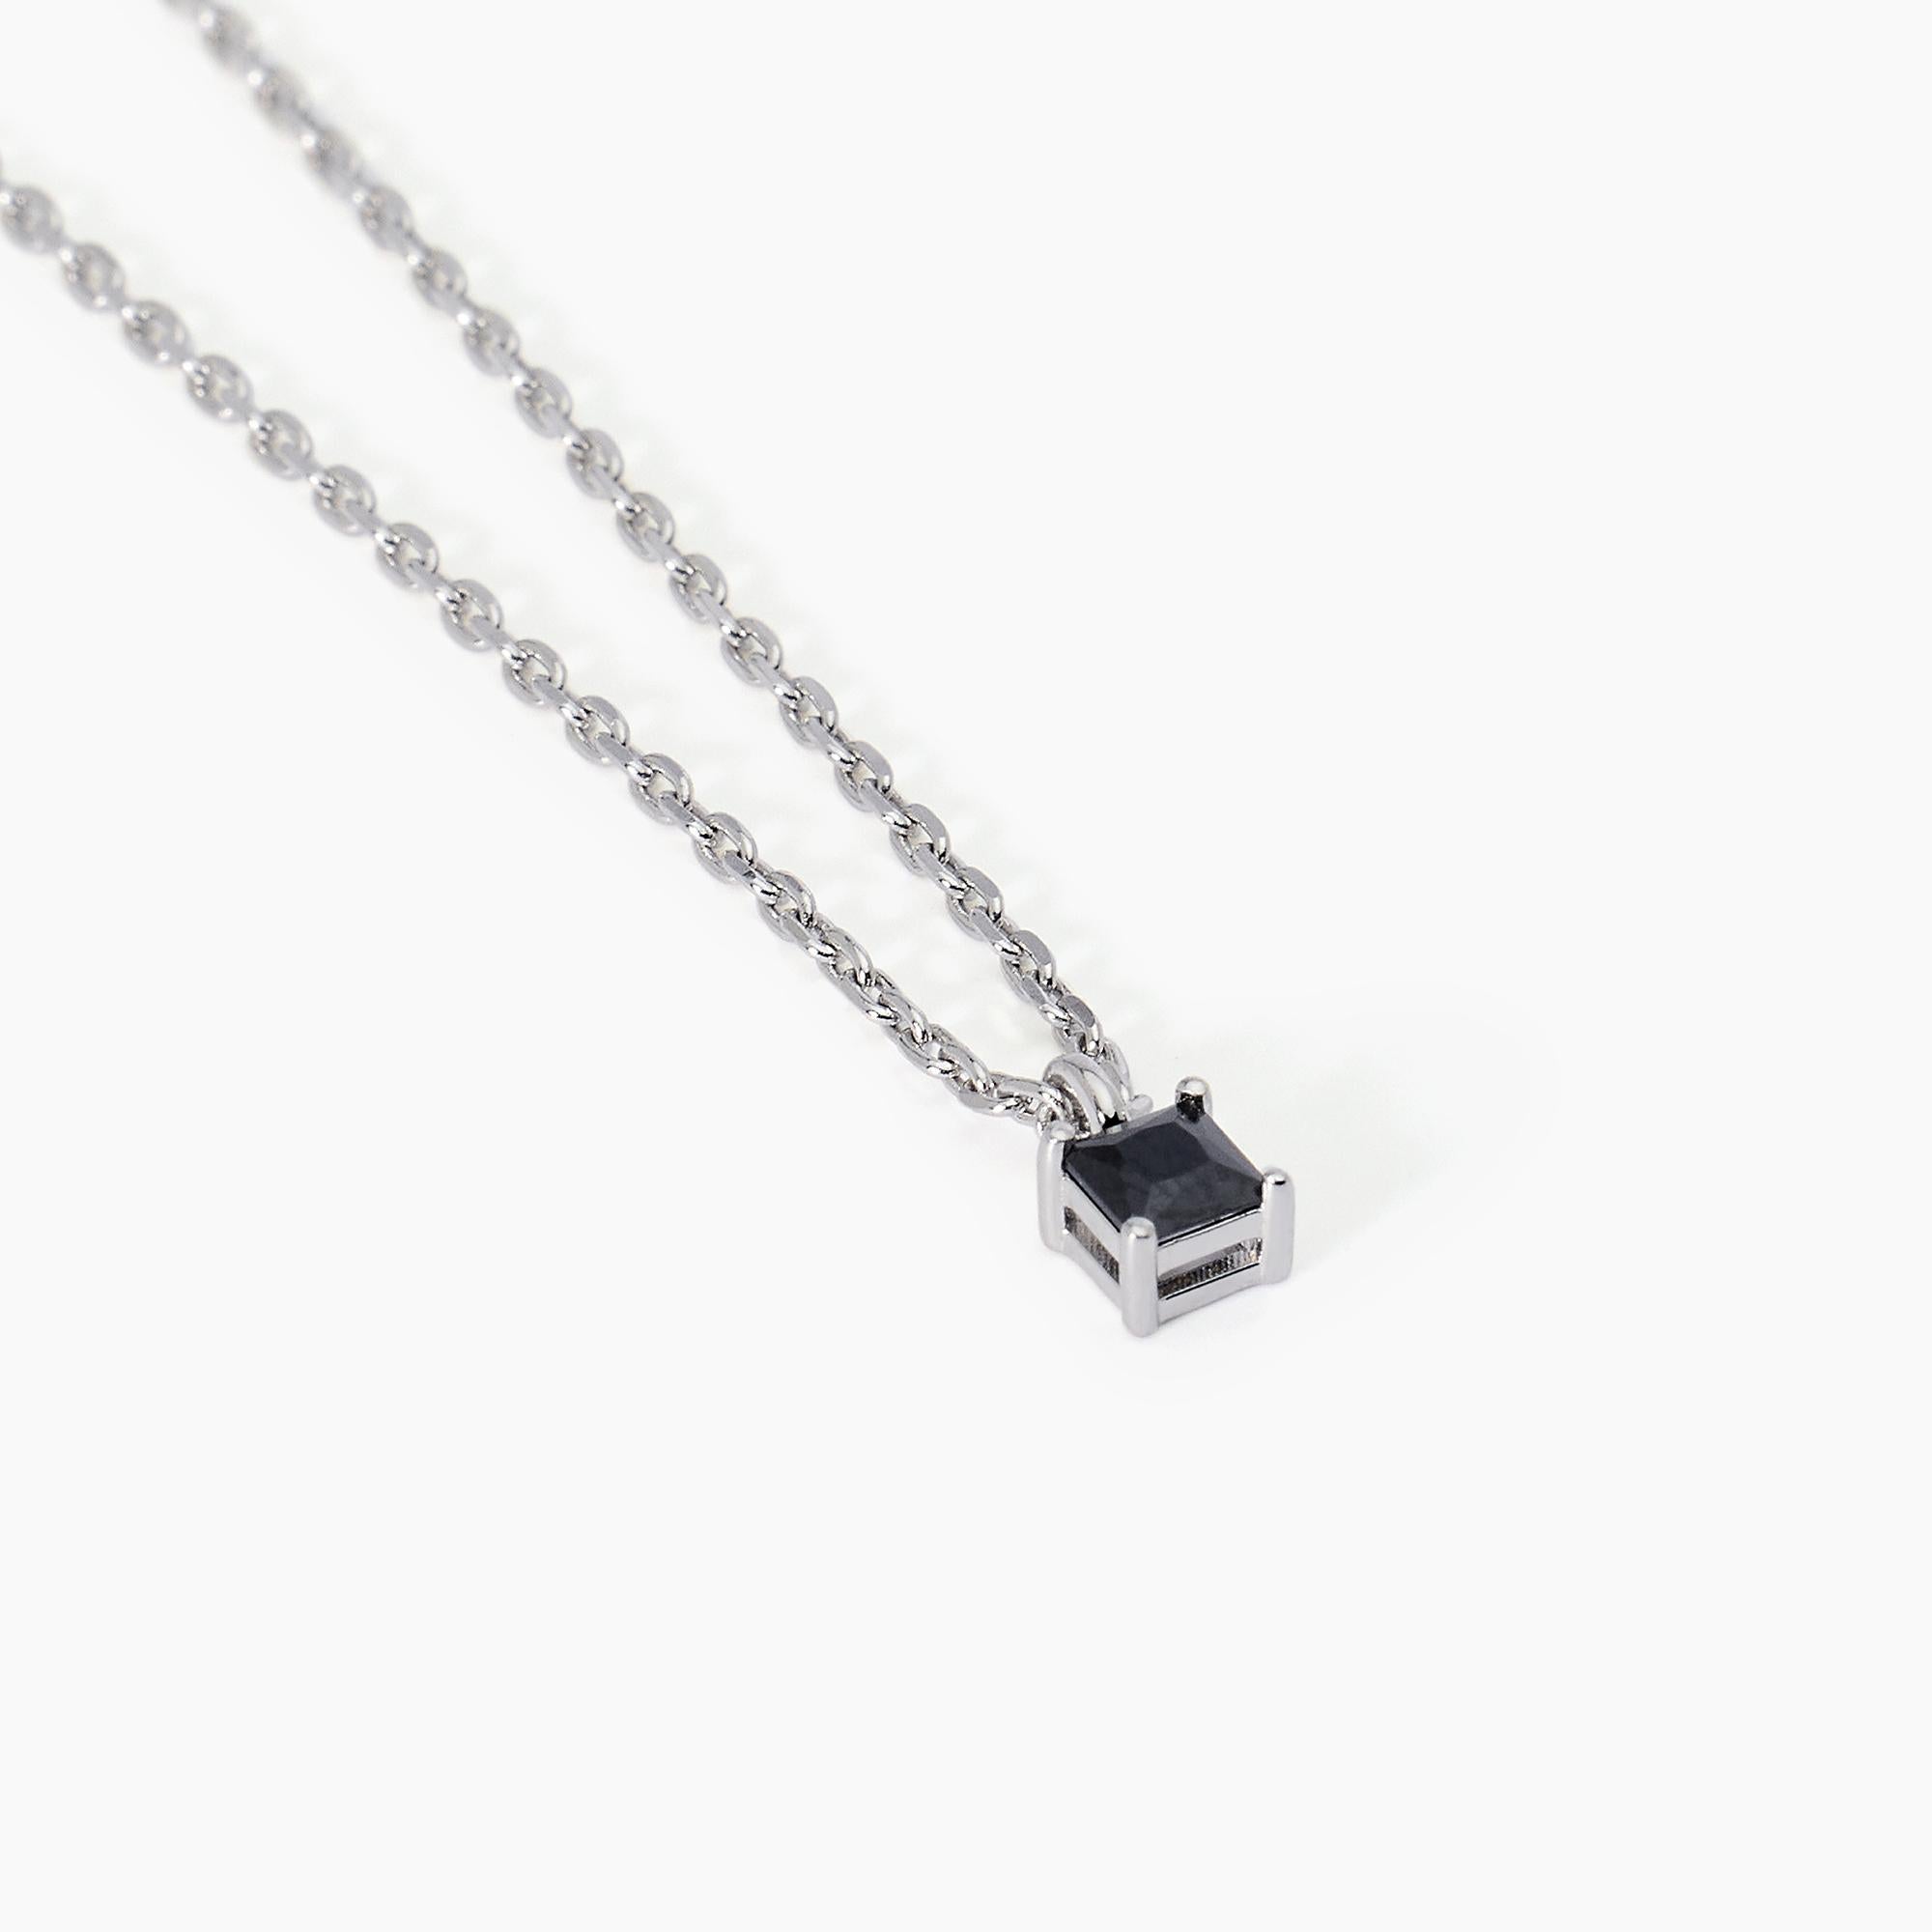 Mabina Uomo - Men's silver necklace with PUNTO DI VISTA pendant - 553572